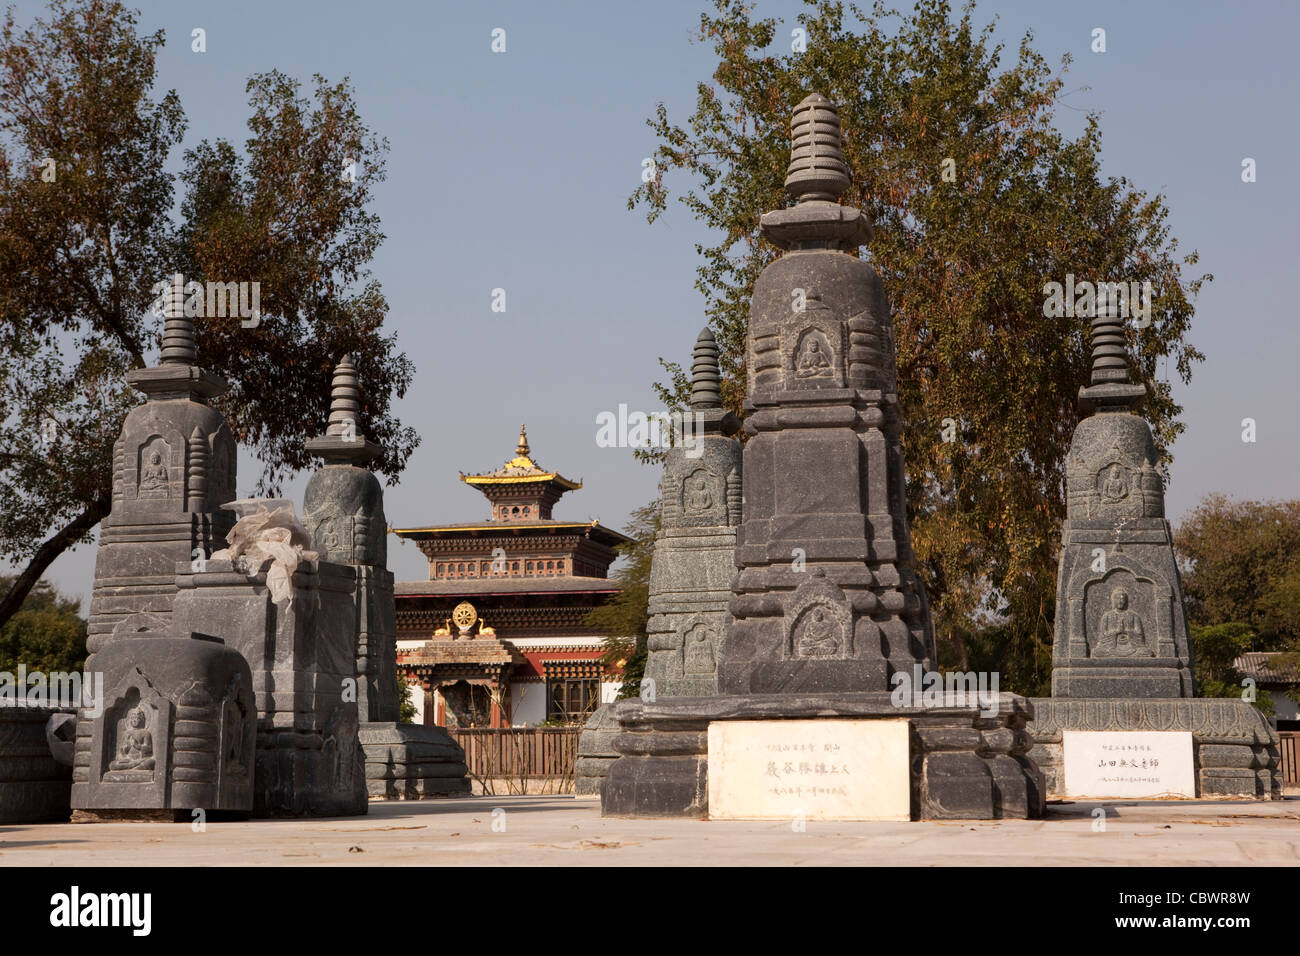 India, Bihar, Bodhgaya, Buddhism, Japanese temple carved stone stupas in temple garden Stock Photo